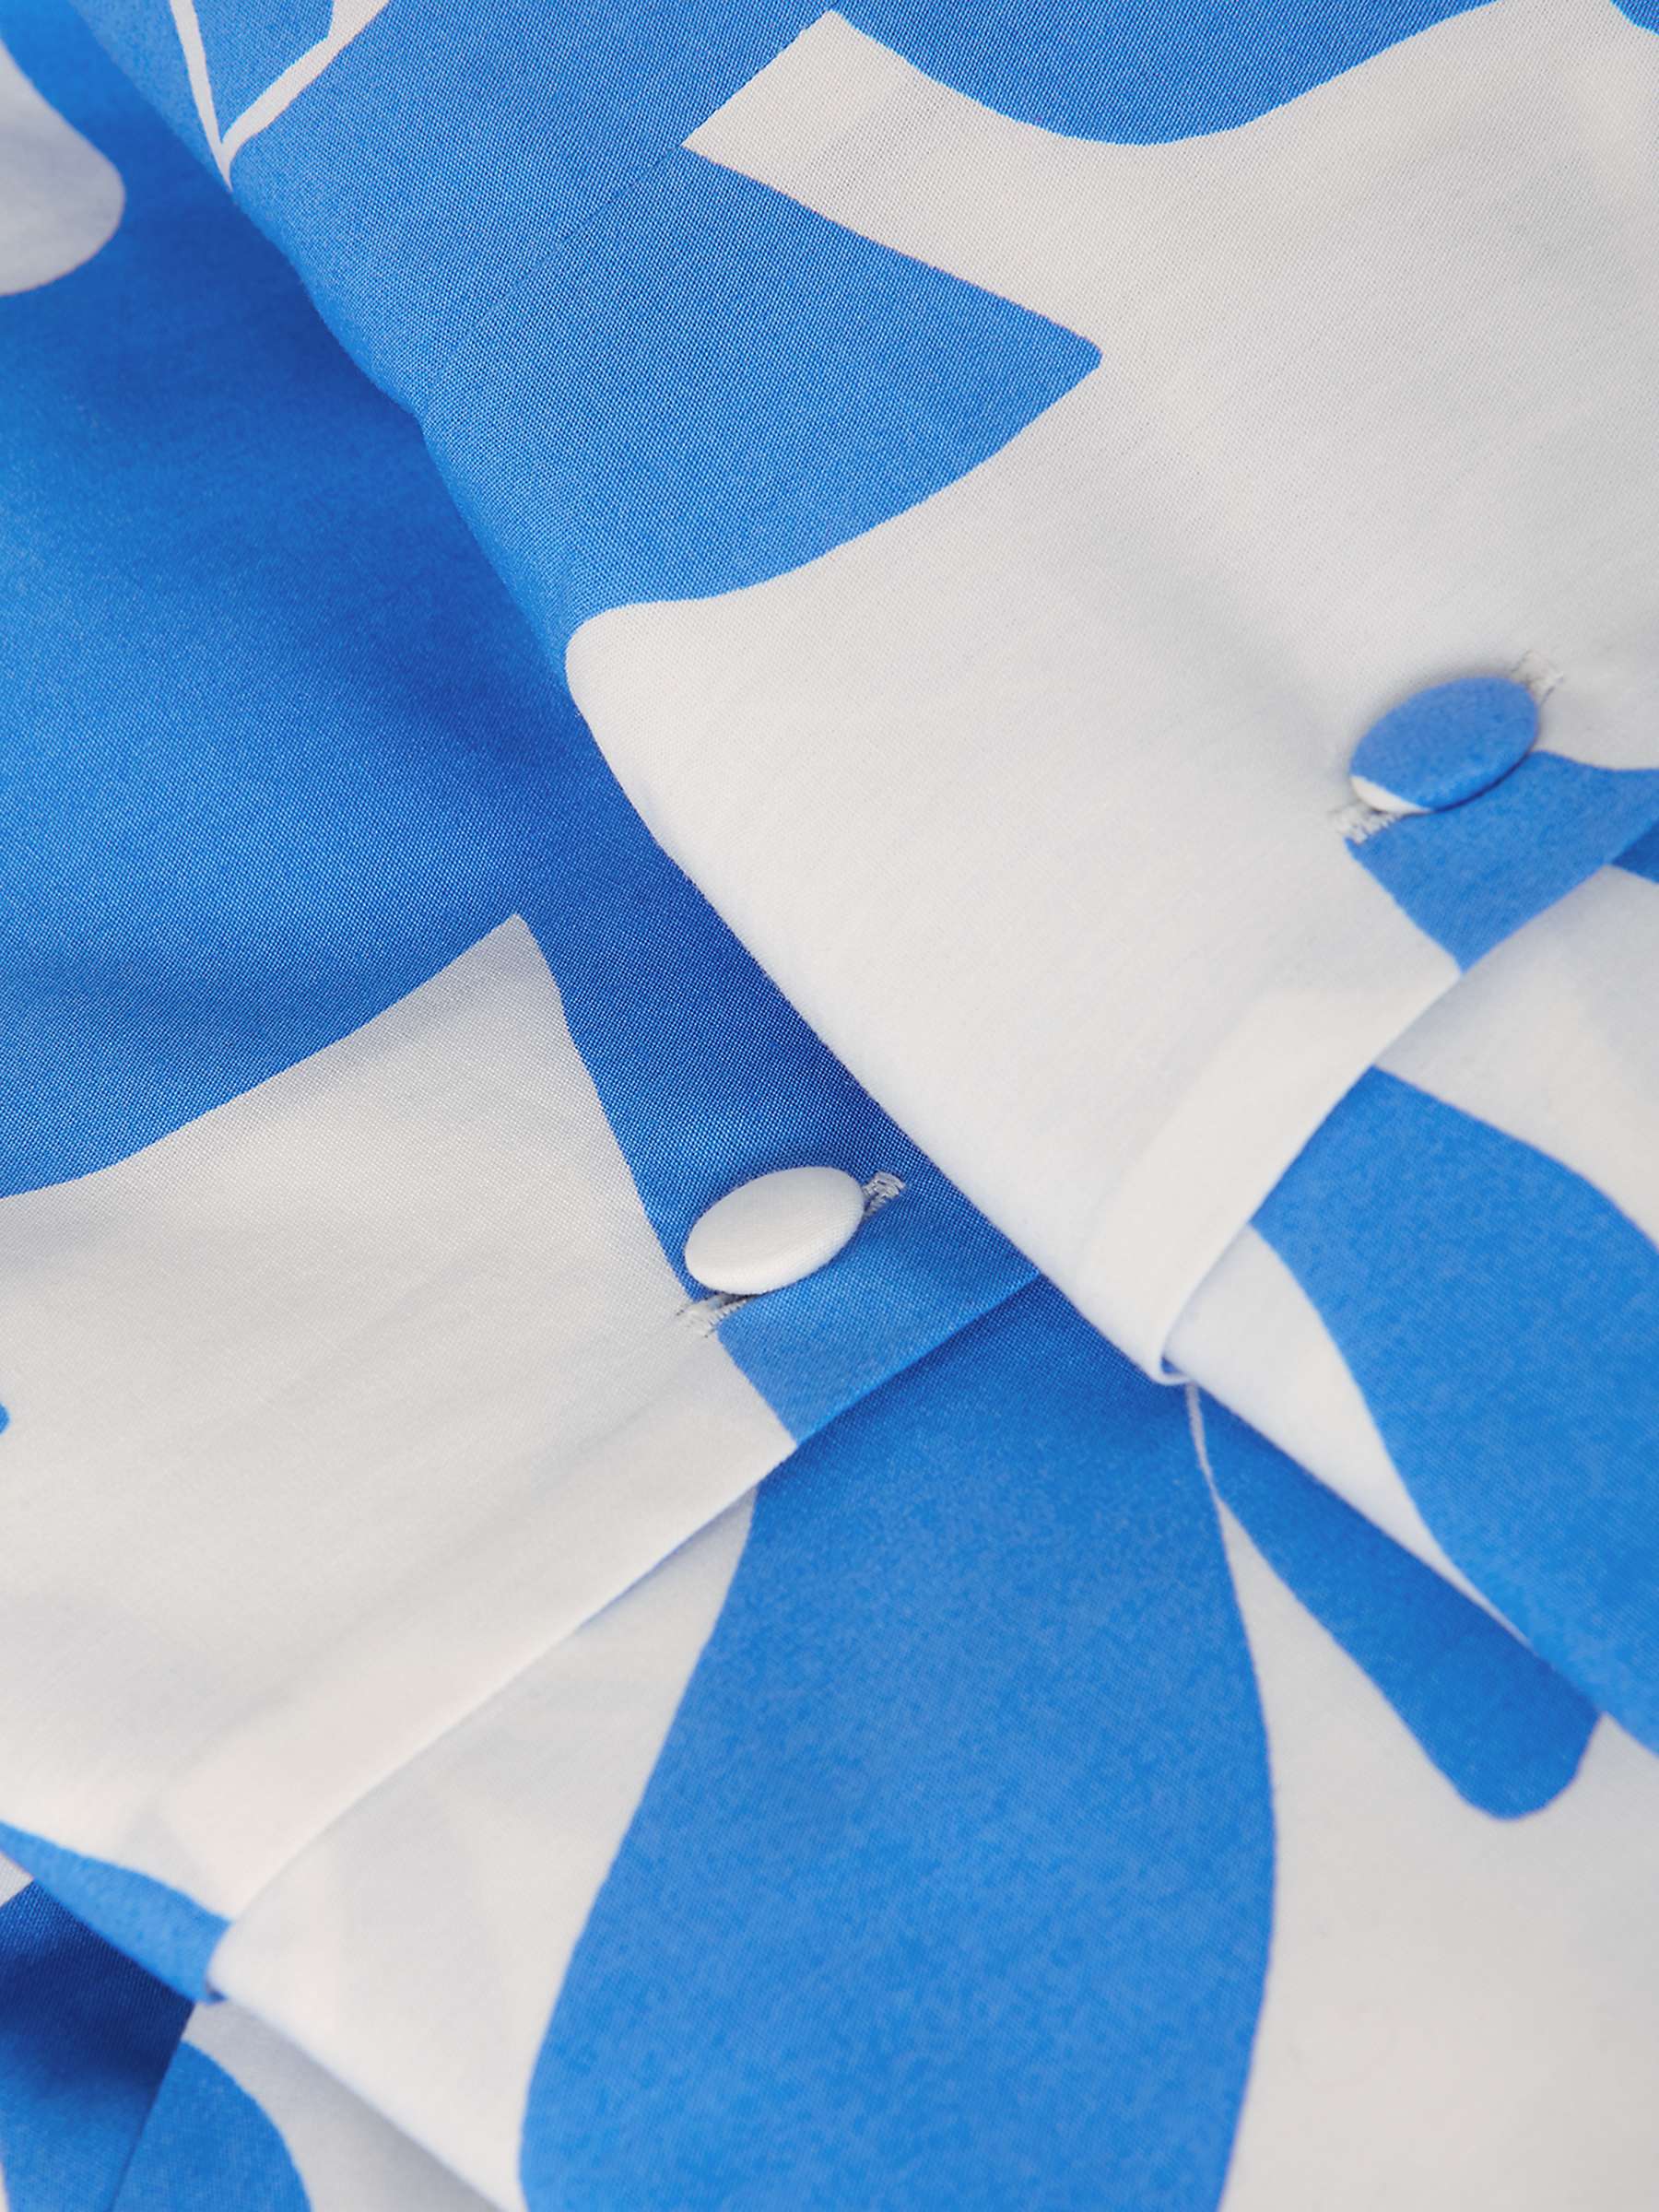 Phase Eight Sienna Midi Dress, Blue/Ivory at John Lewis & Partners